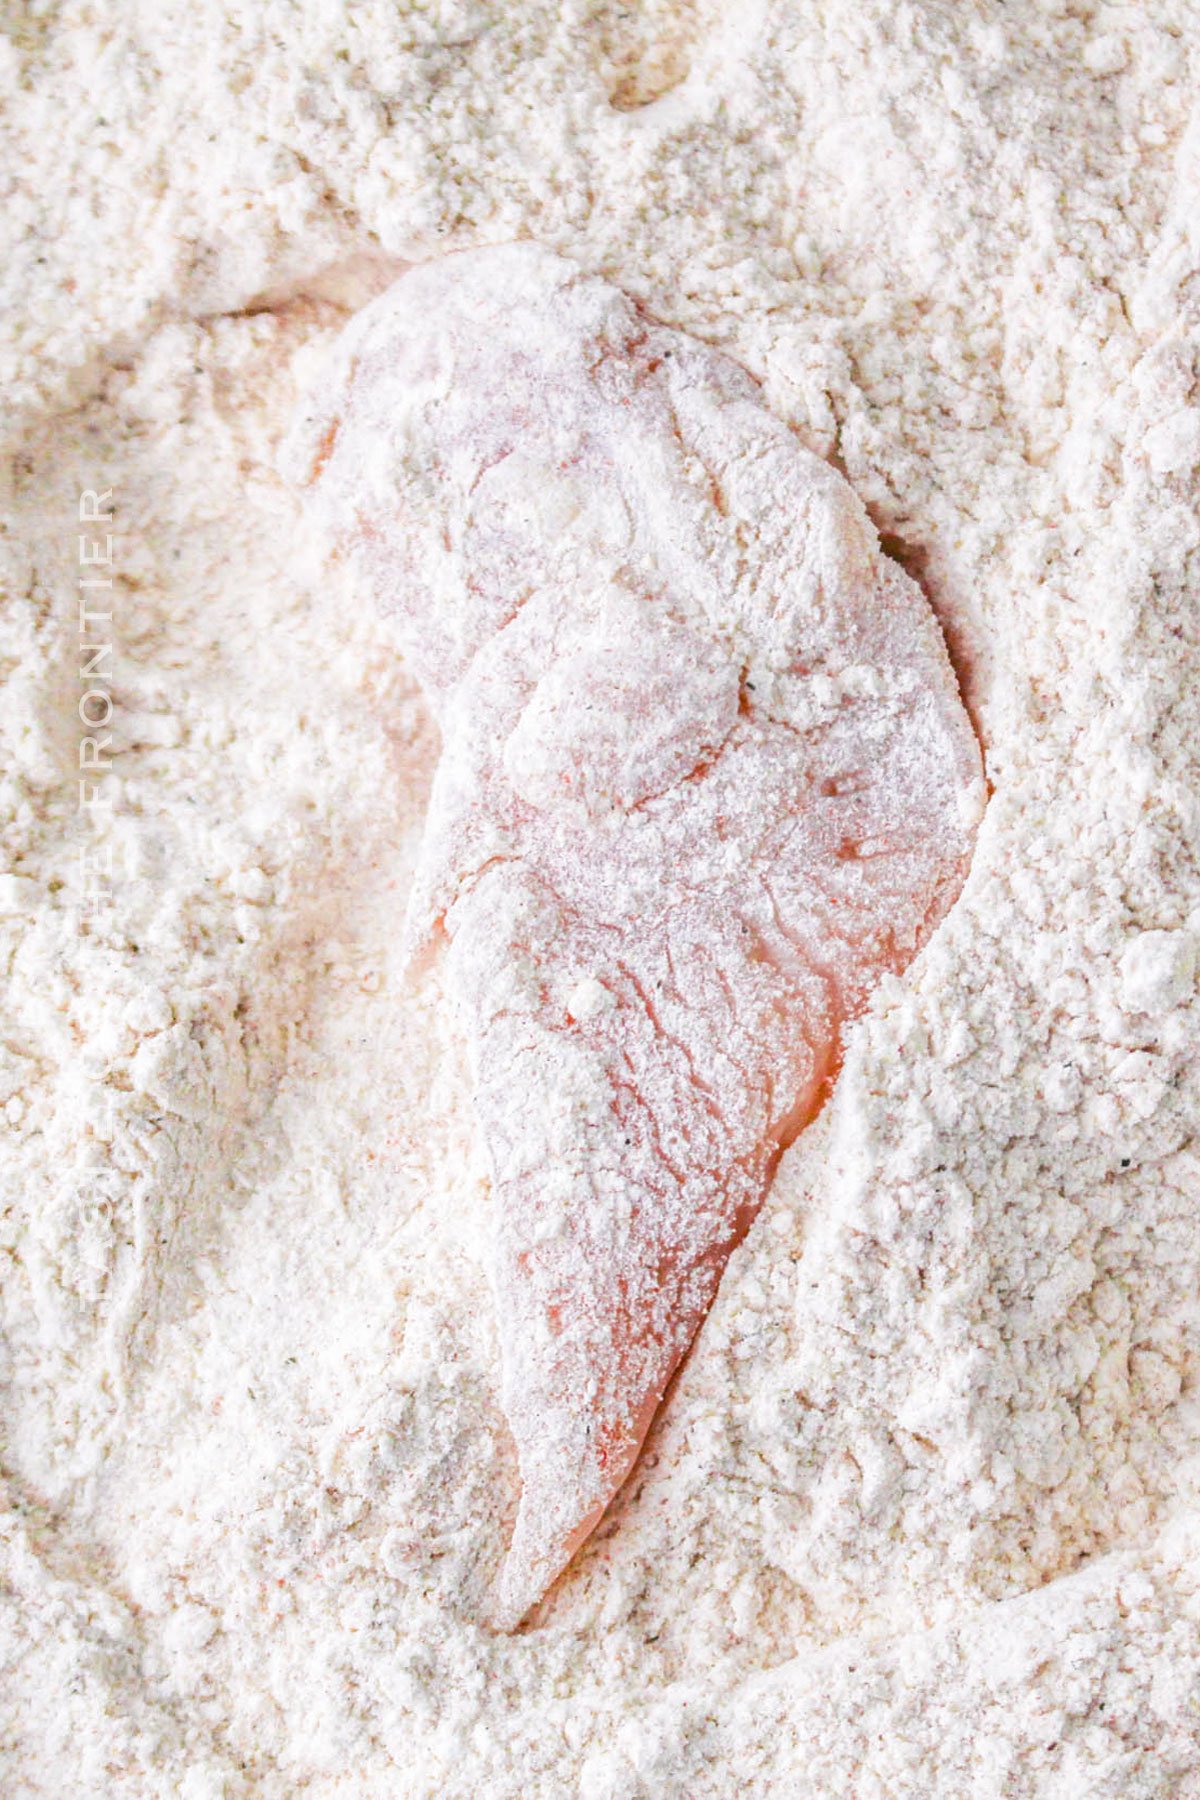 flour coating